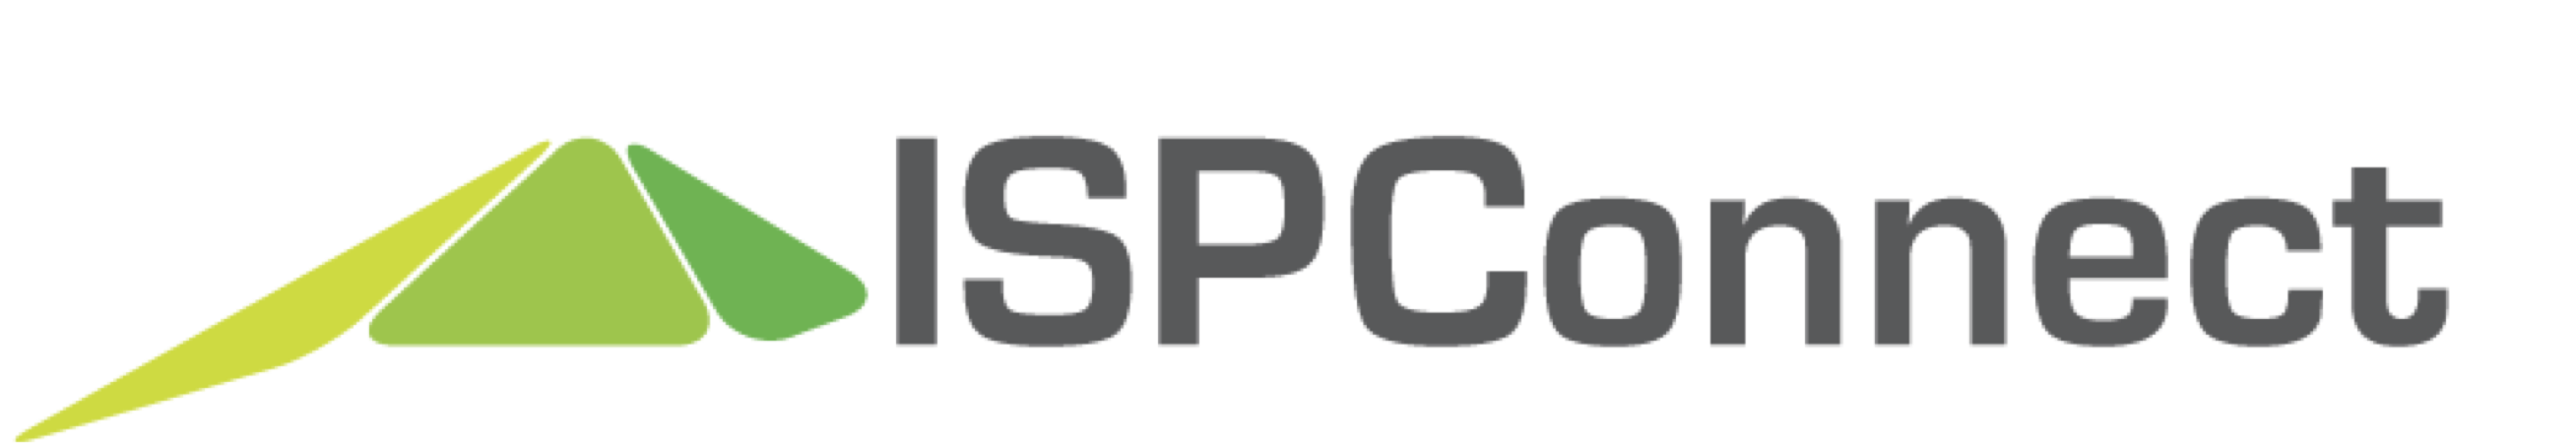 ISPConnect logo